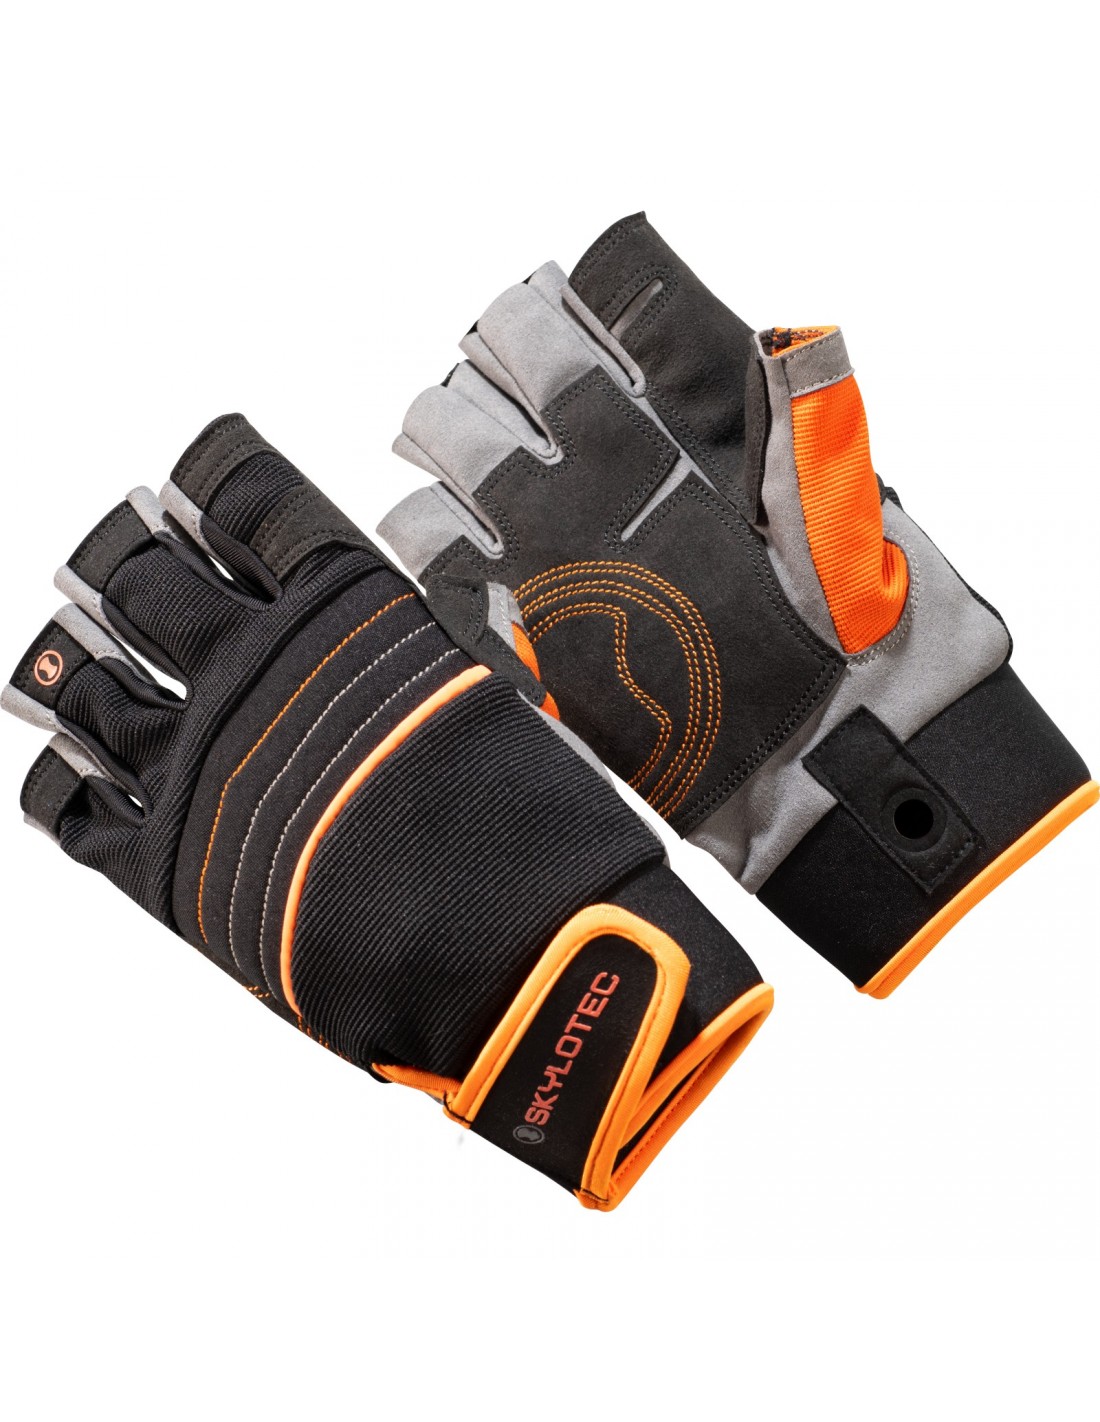 Skylotec Klettersteighandschuhe Skygrip Half Finger Handschuhgröße - S, günstig online kaufen